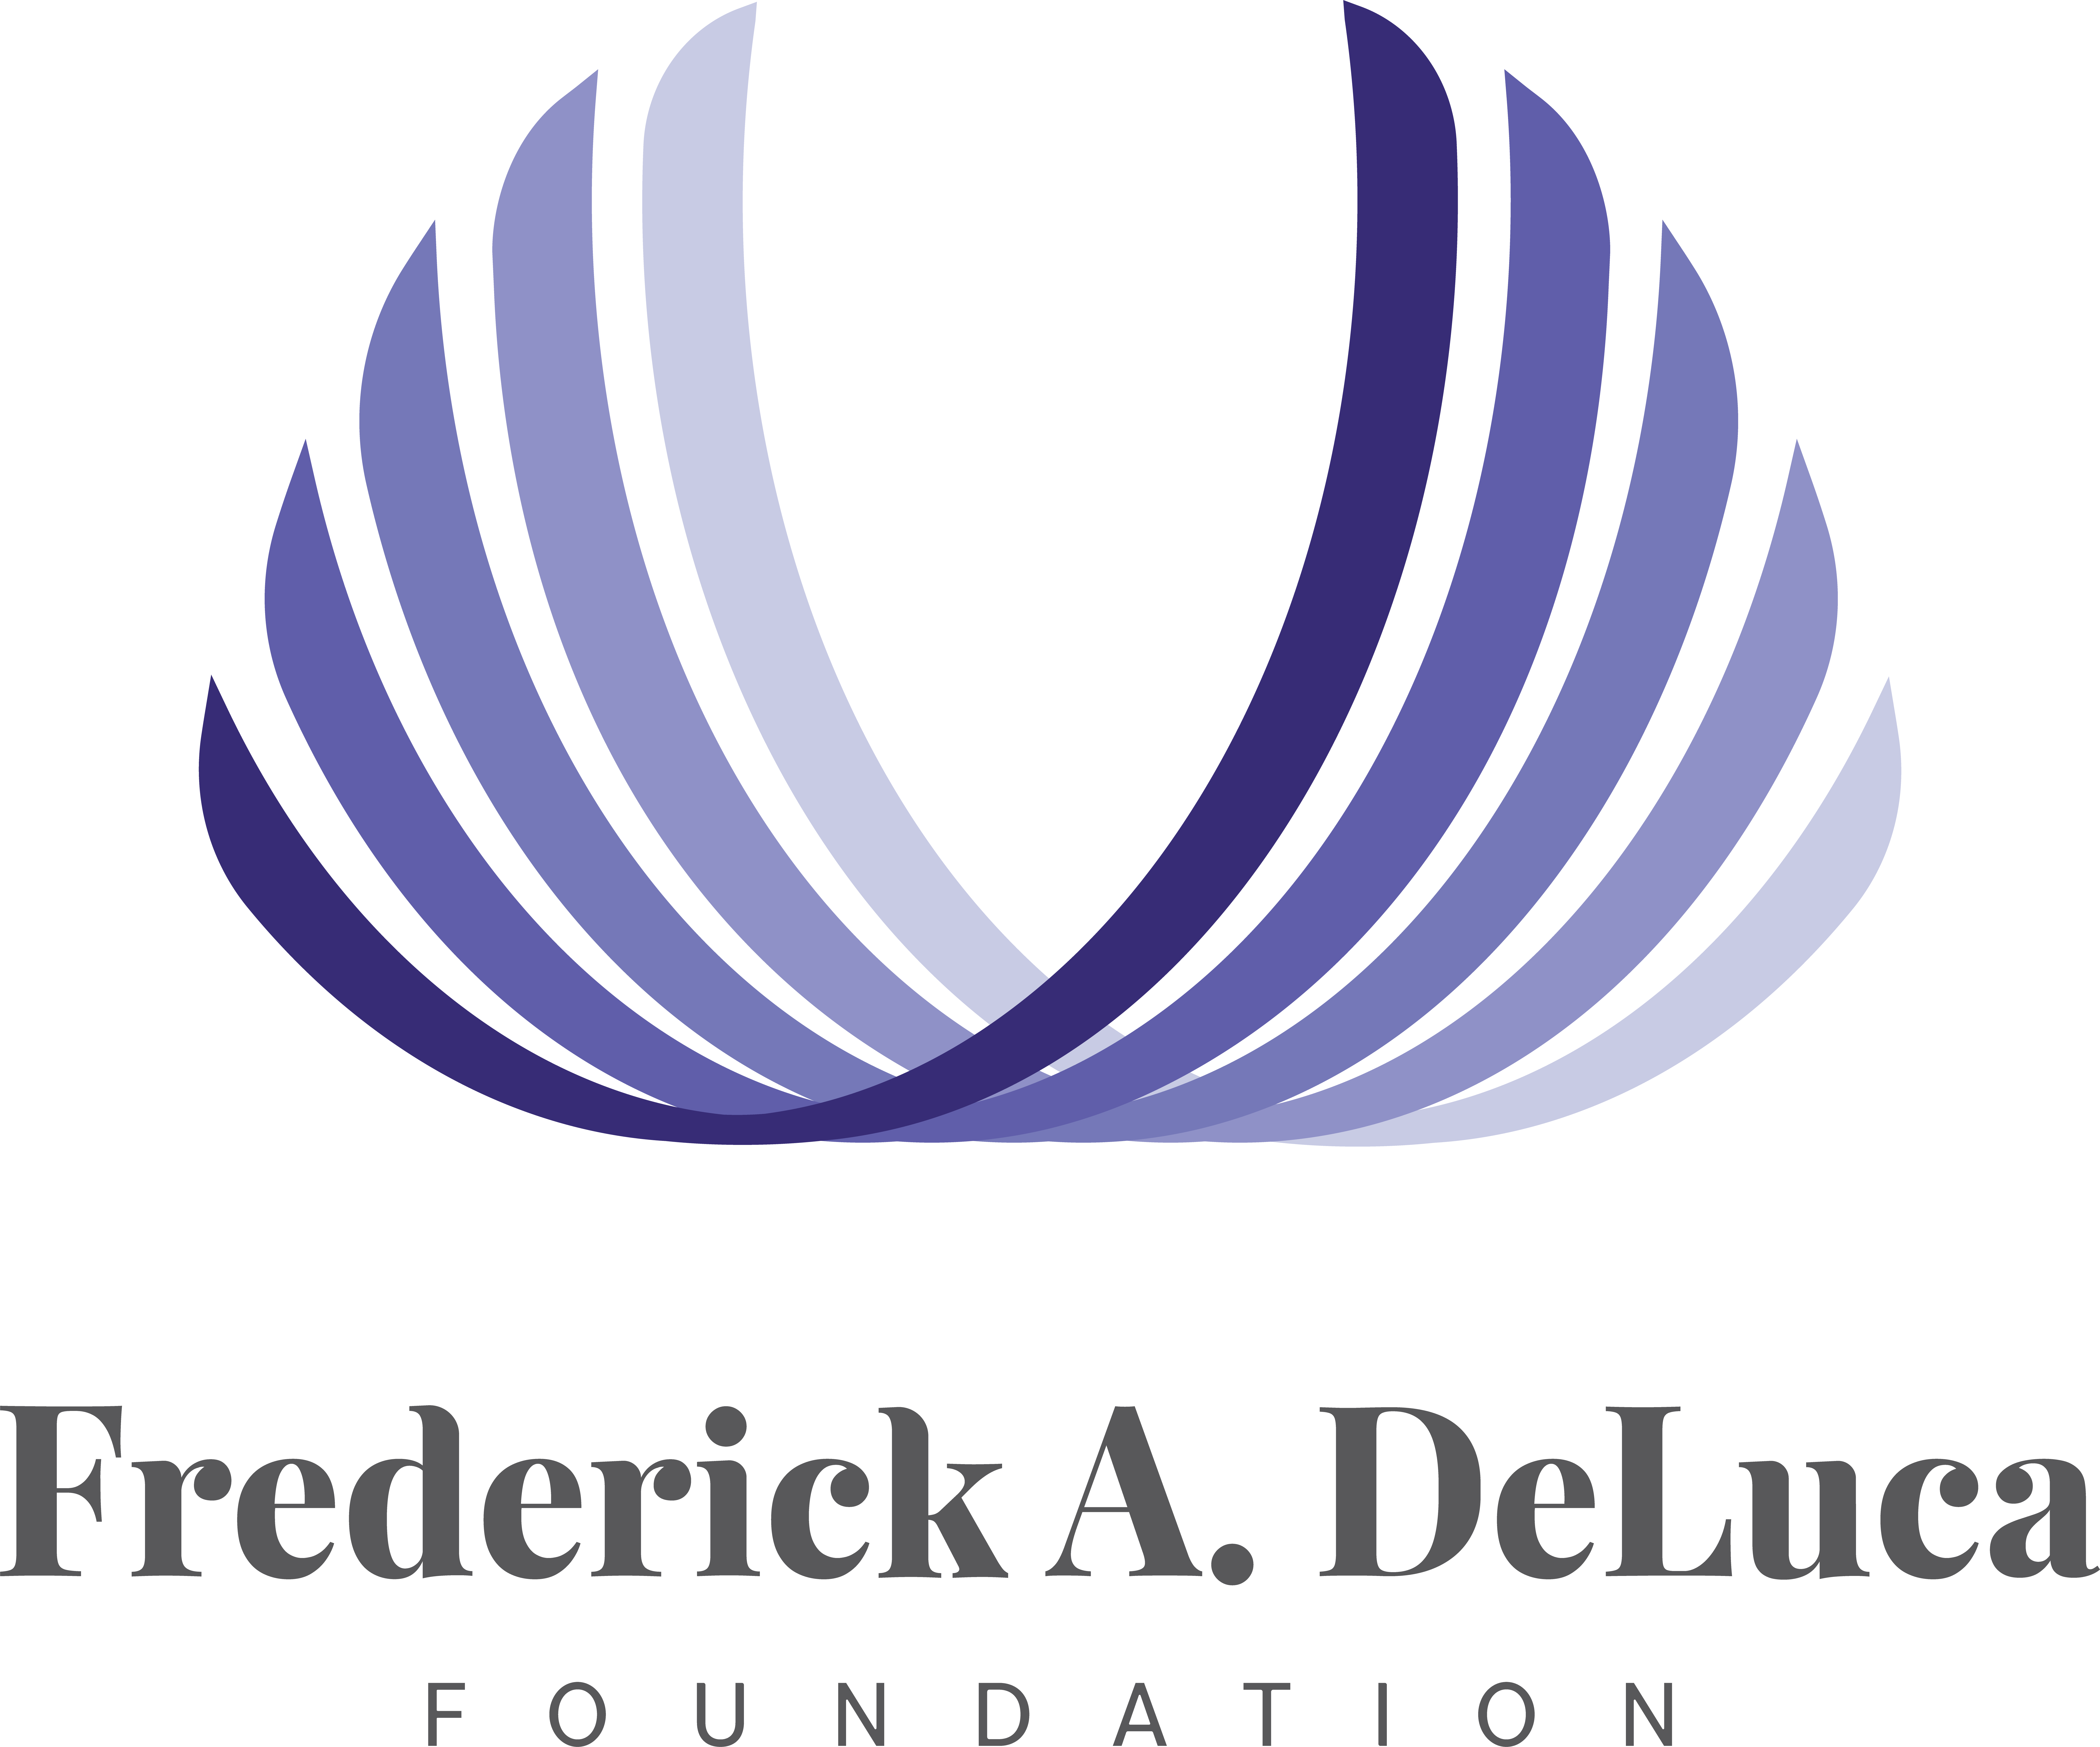 Frederick A. DeLuca Foundation logo